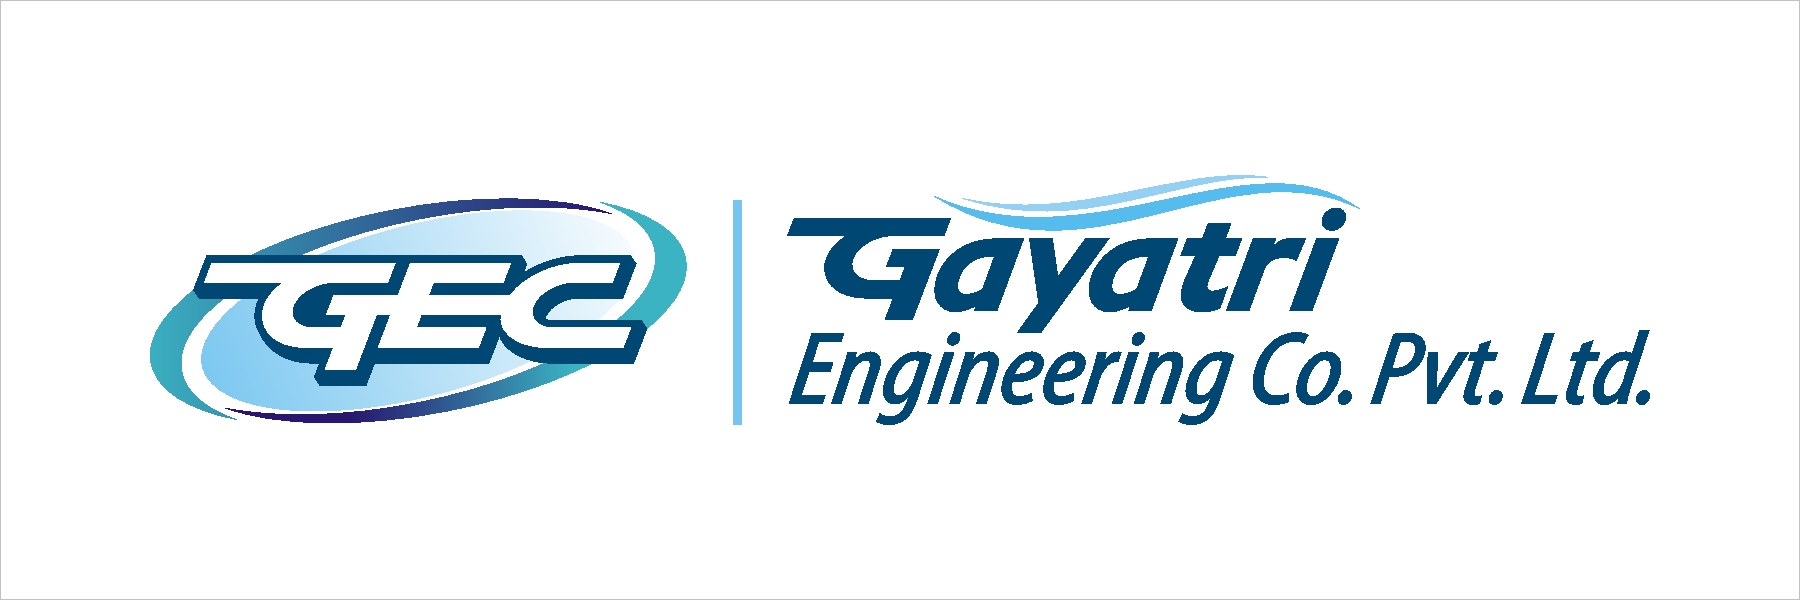 Gayatri_New_Final_Logo.jpg